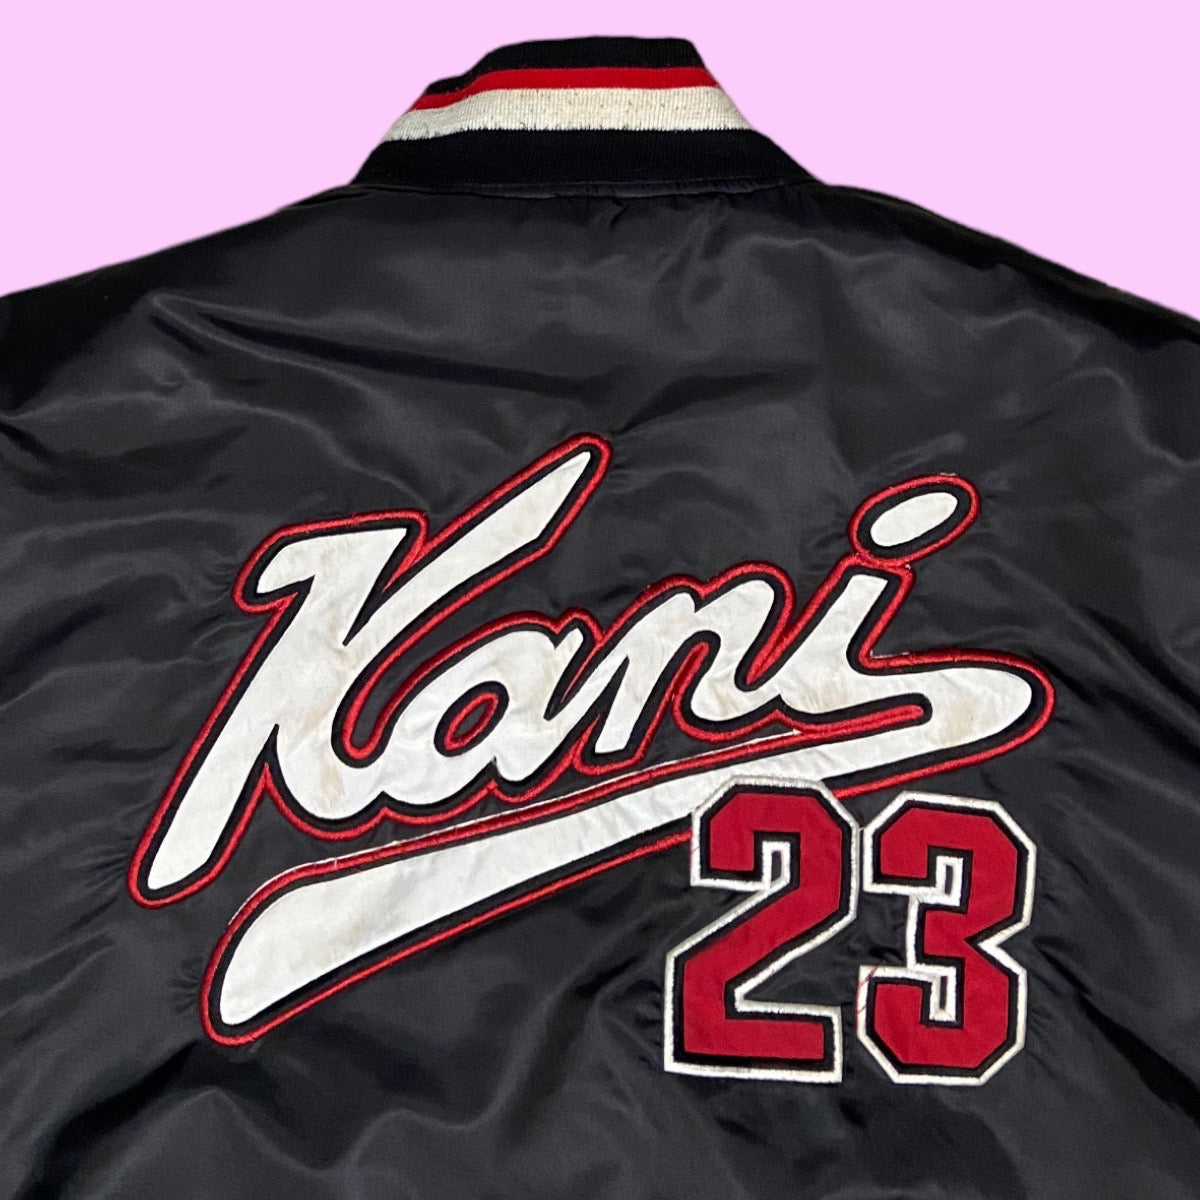 Vintage Kani bomber jacket - L